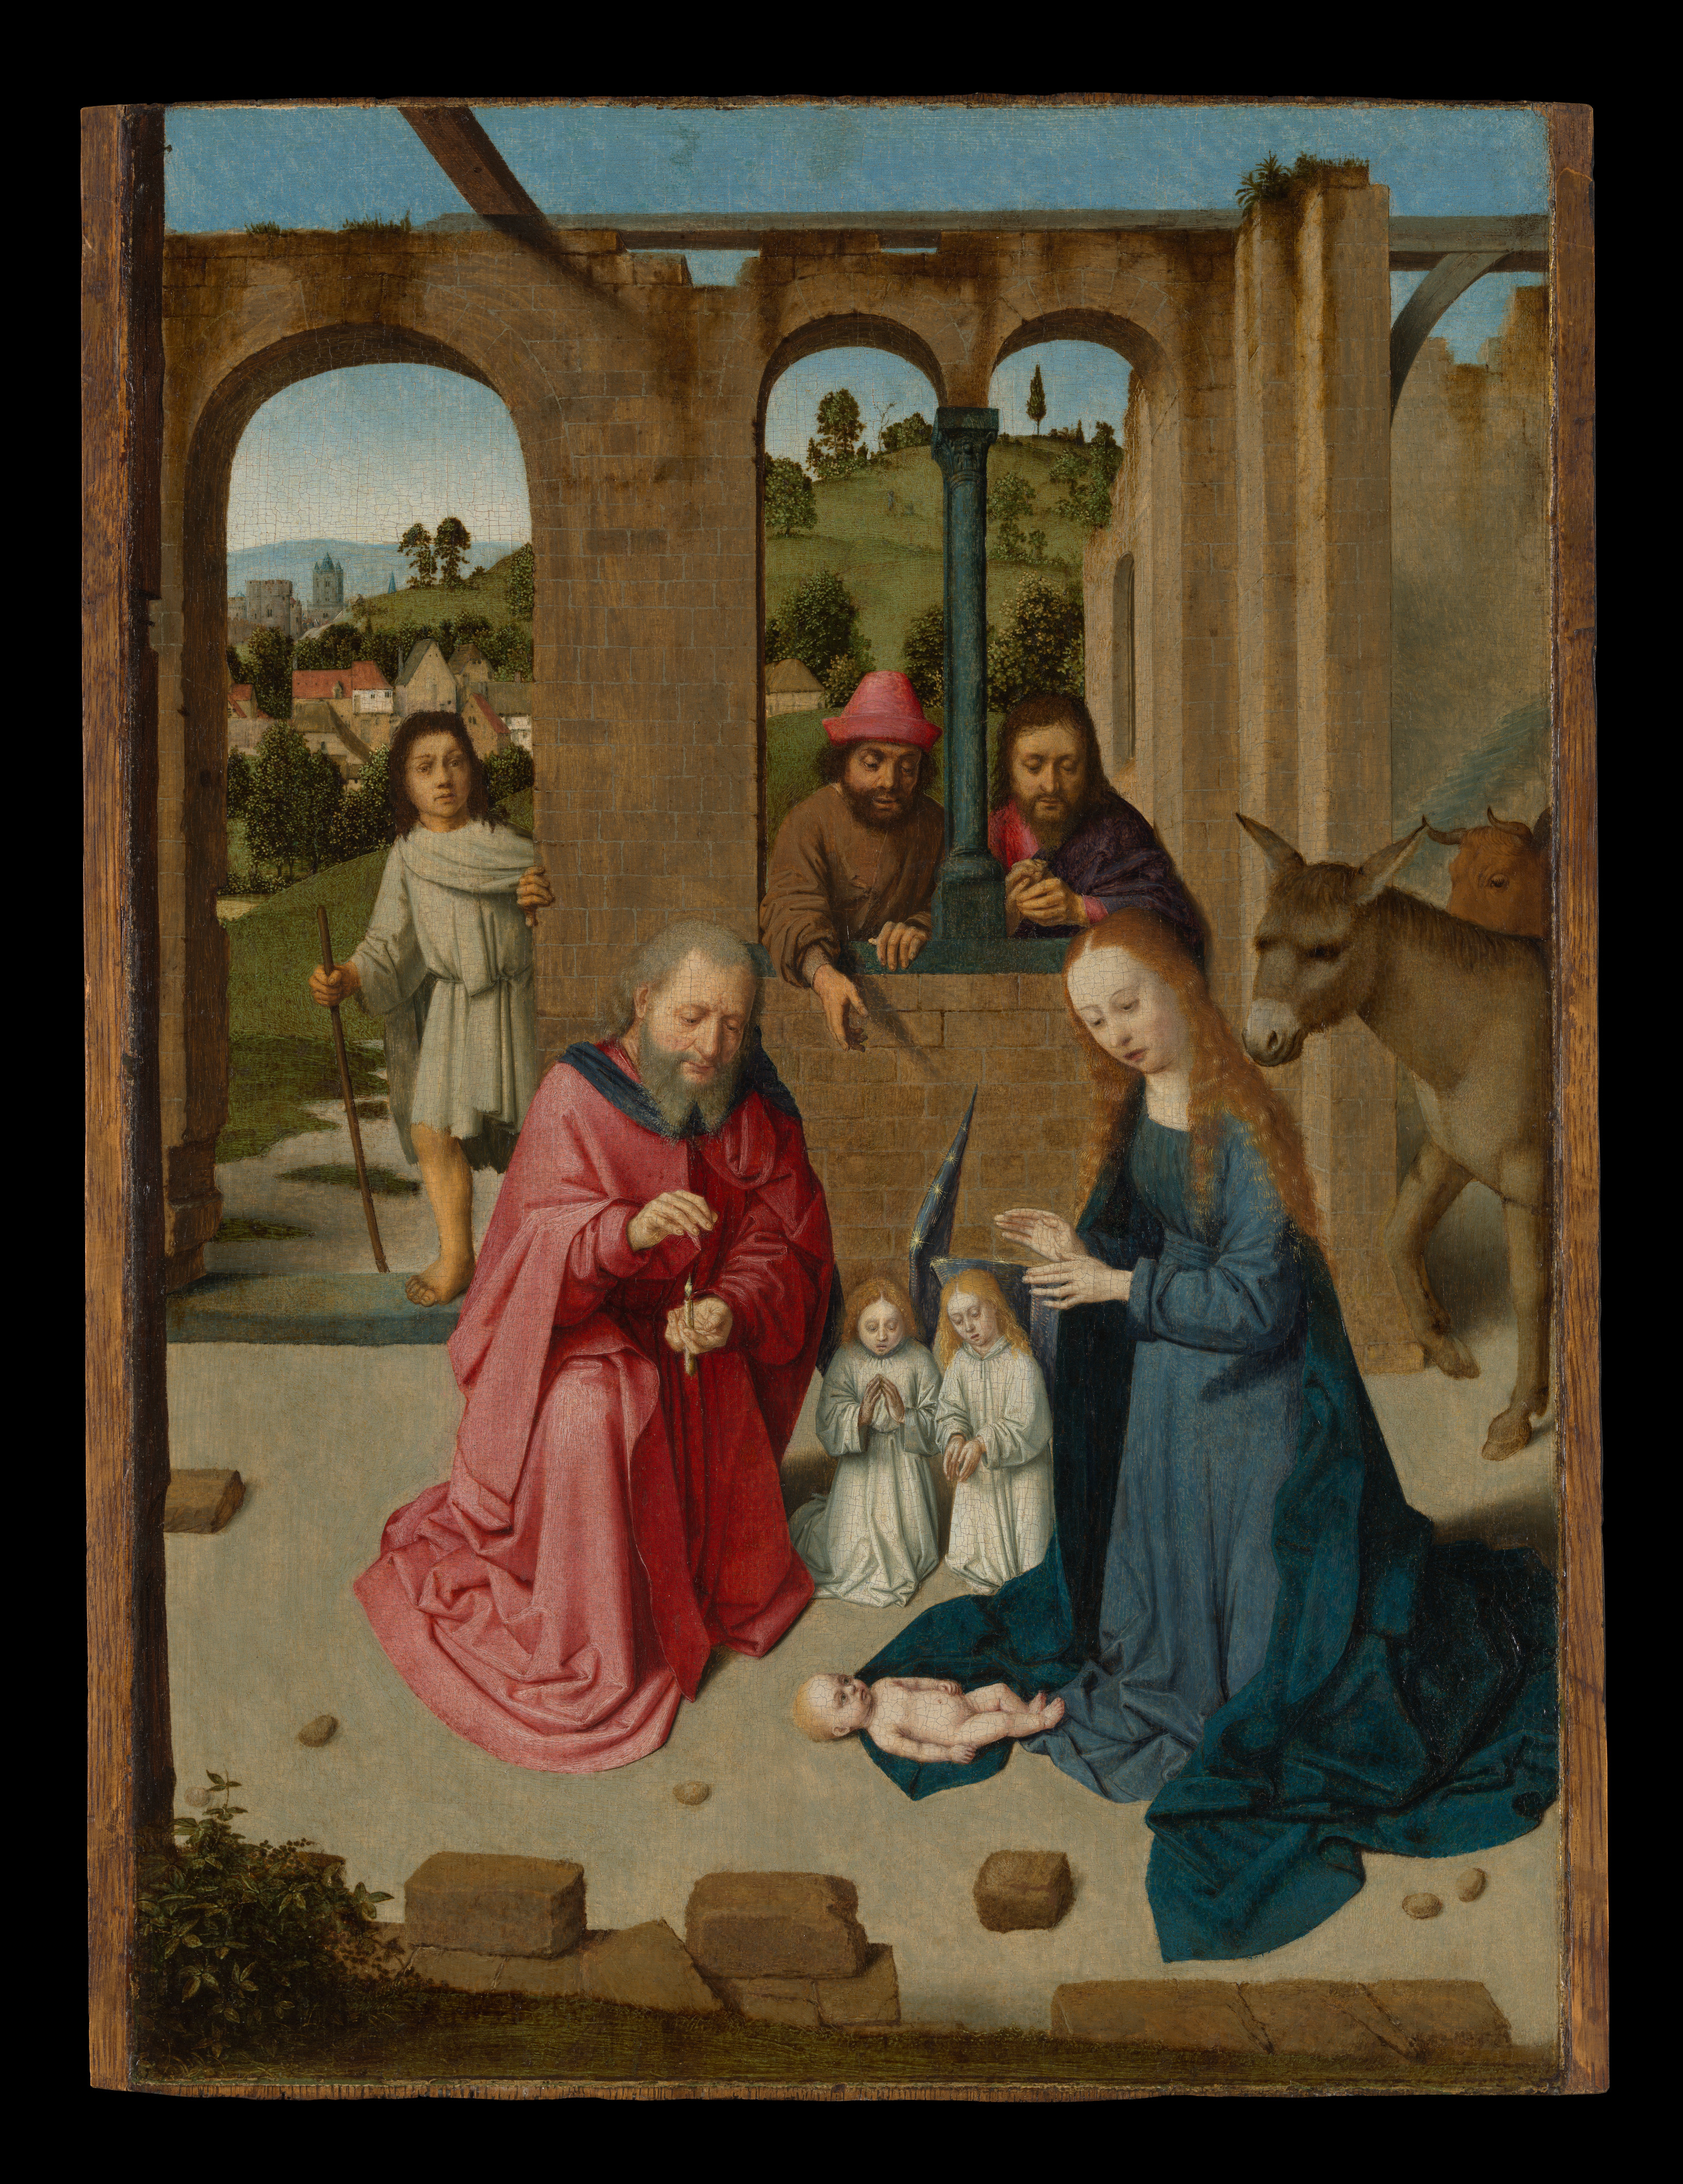 Large Nativity Canvas Print 'Manger', 24 x 36